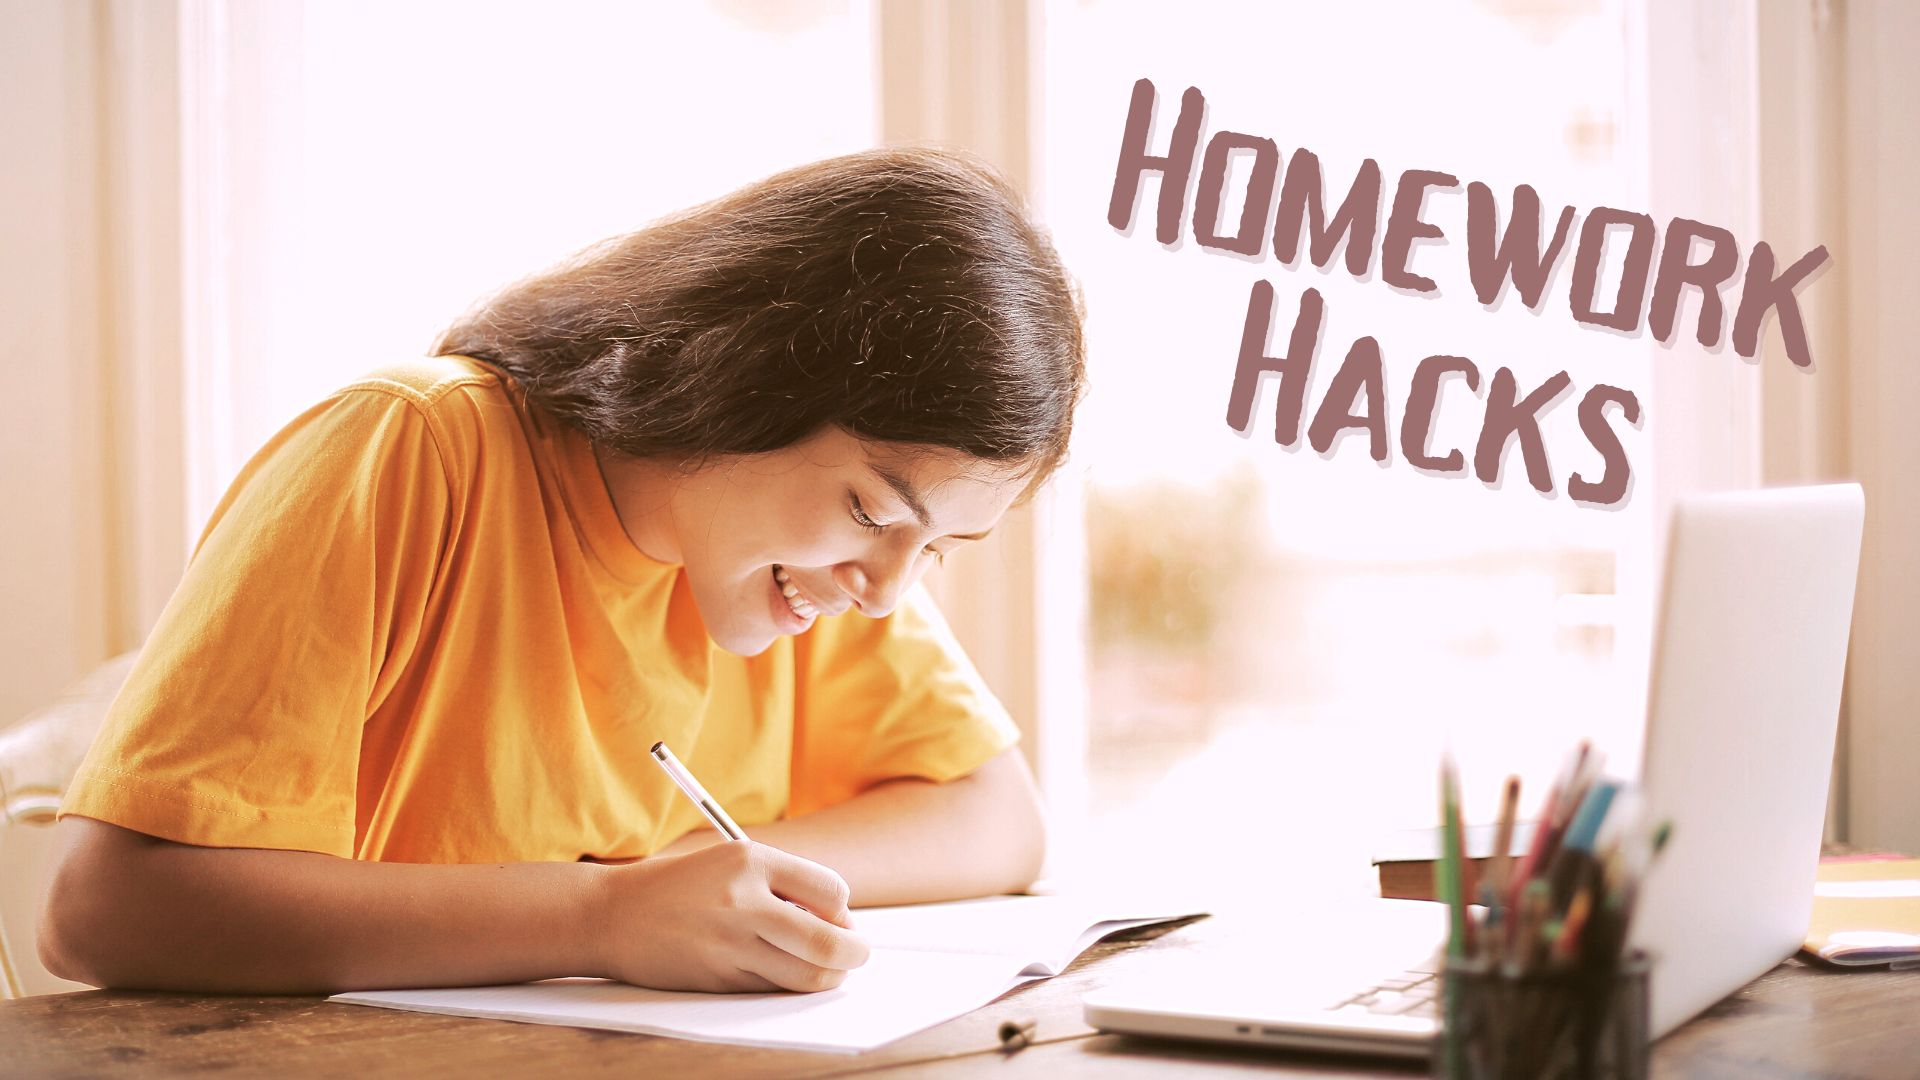 homework hacks